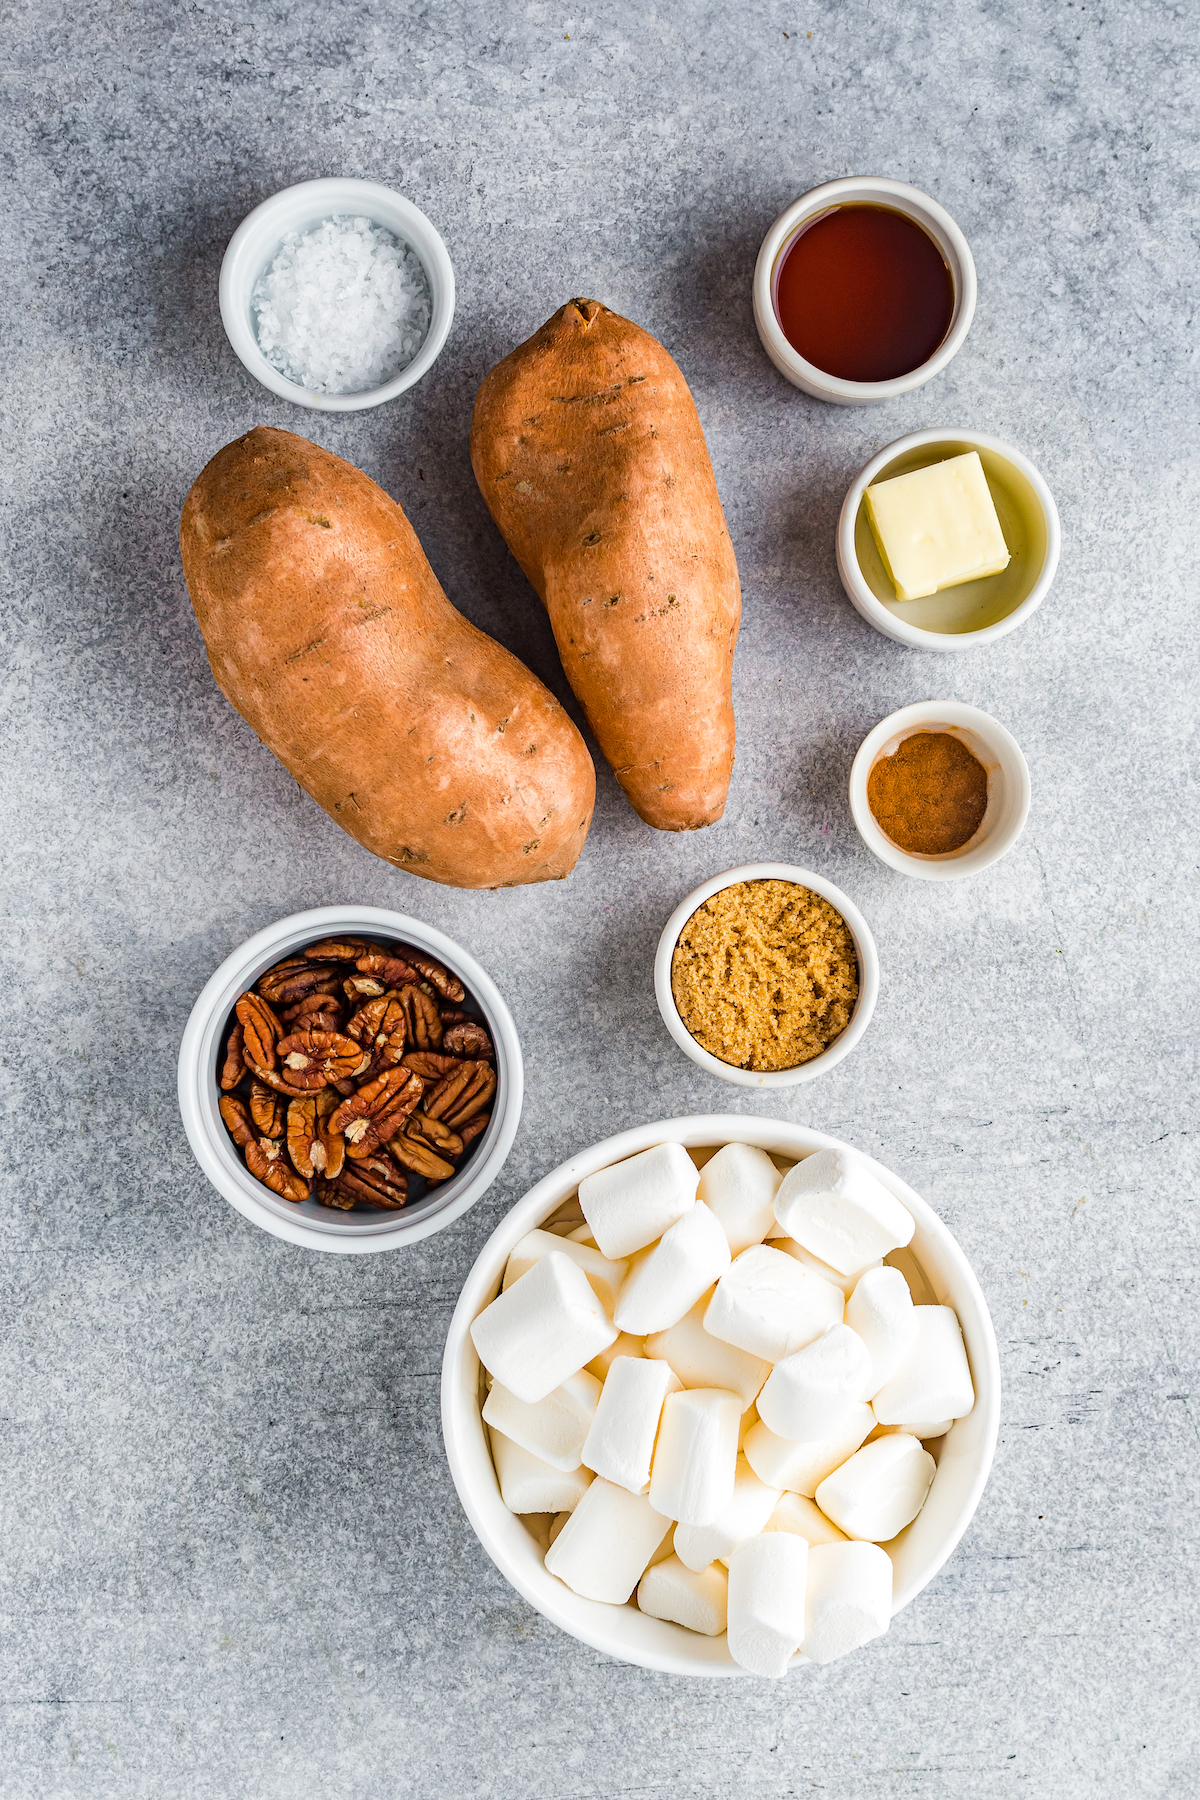 Ingredients for sweet potato bites.